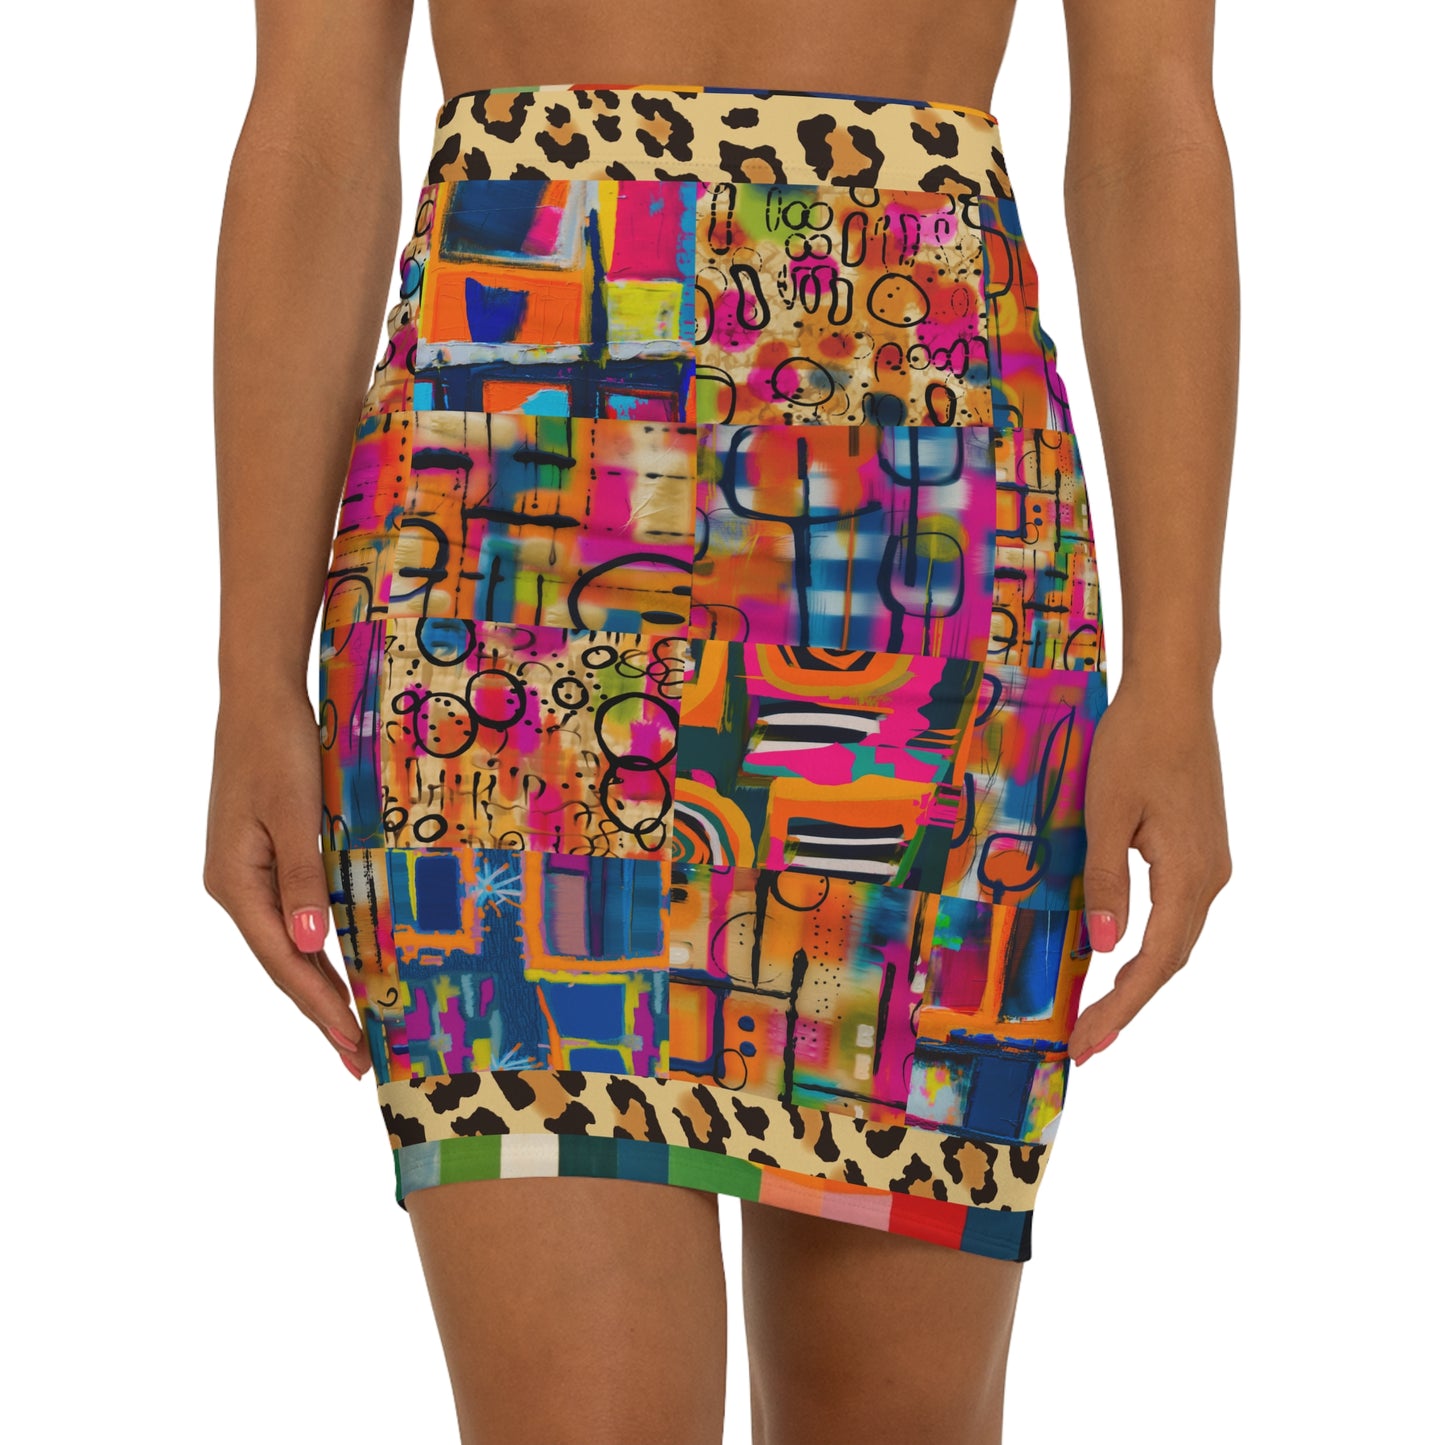 You Got Me Abstract Leopard Graffiti Print Pencil Skirt